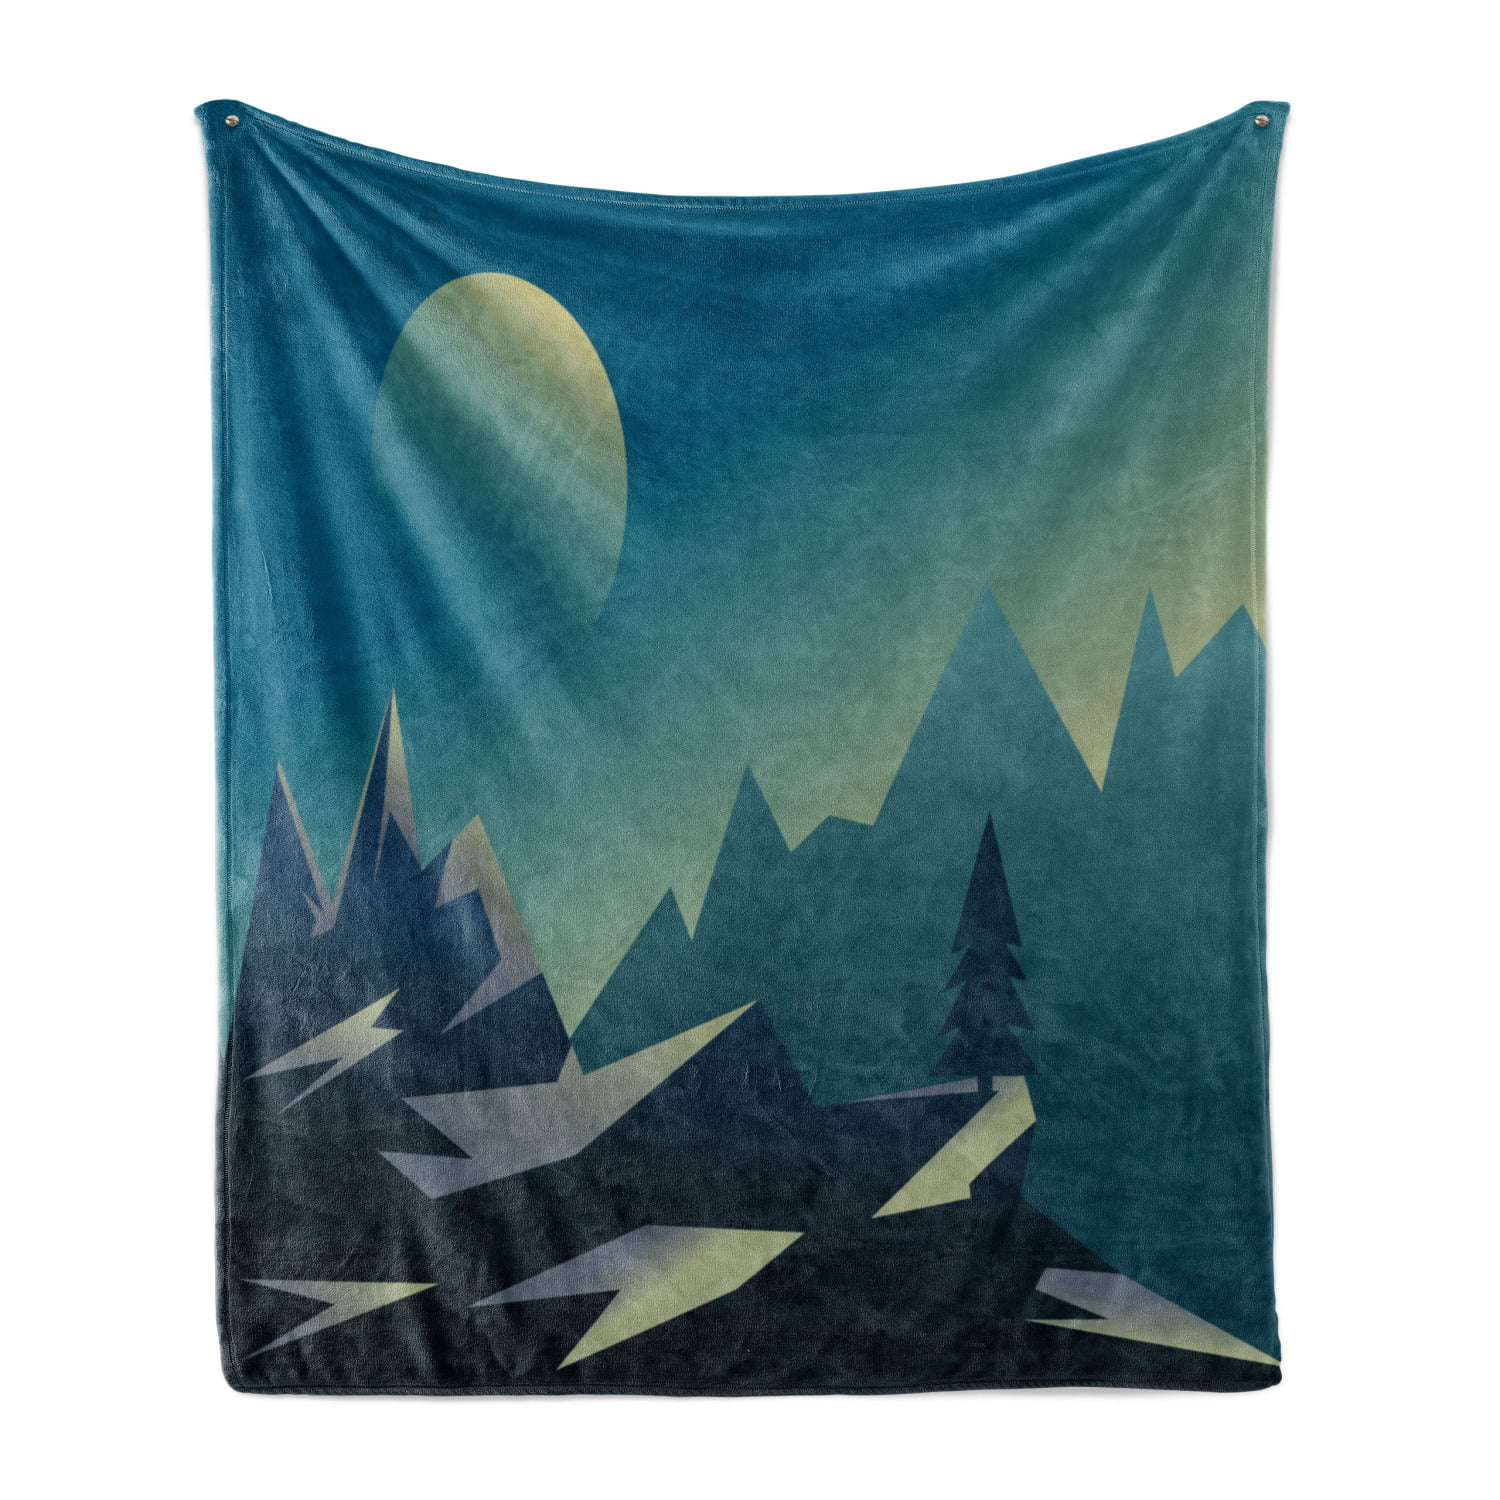 Flannel Fleece Blanket,Mountain Peak Sunset Art Landscape Cozy Plush Microfiber Throw Blankets-Lightweight Reversible Soft Warm Blanket,All Season Bed Blankets for Couch Sofa Throw 40x50 Inch